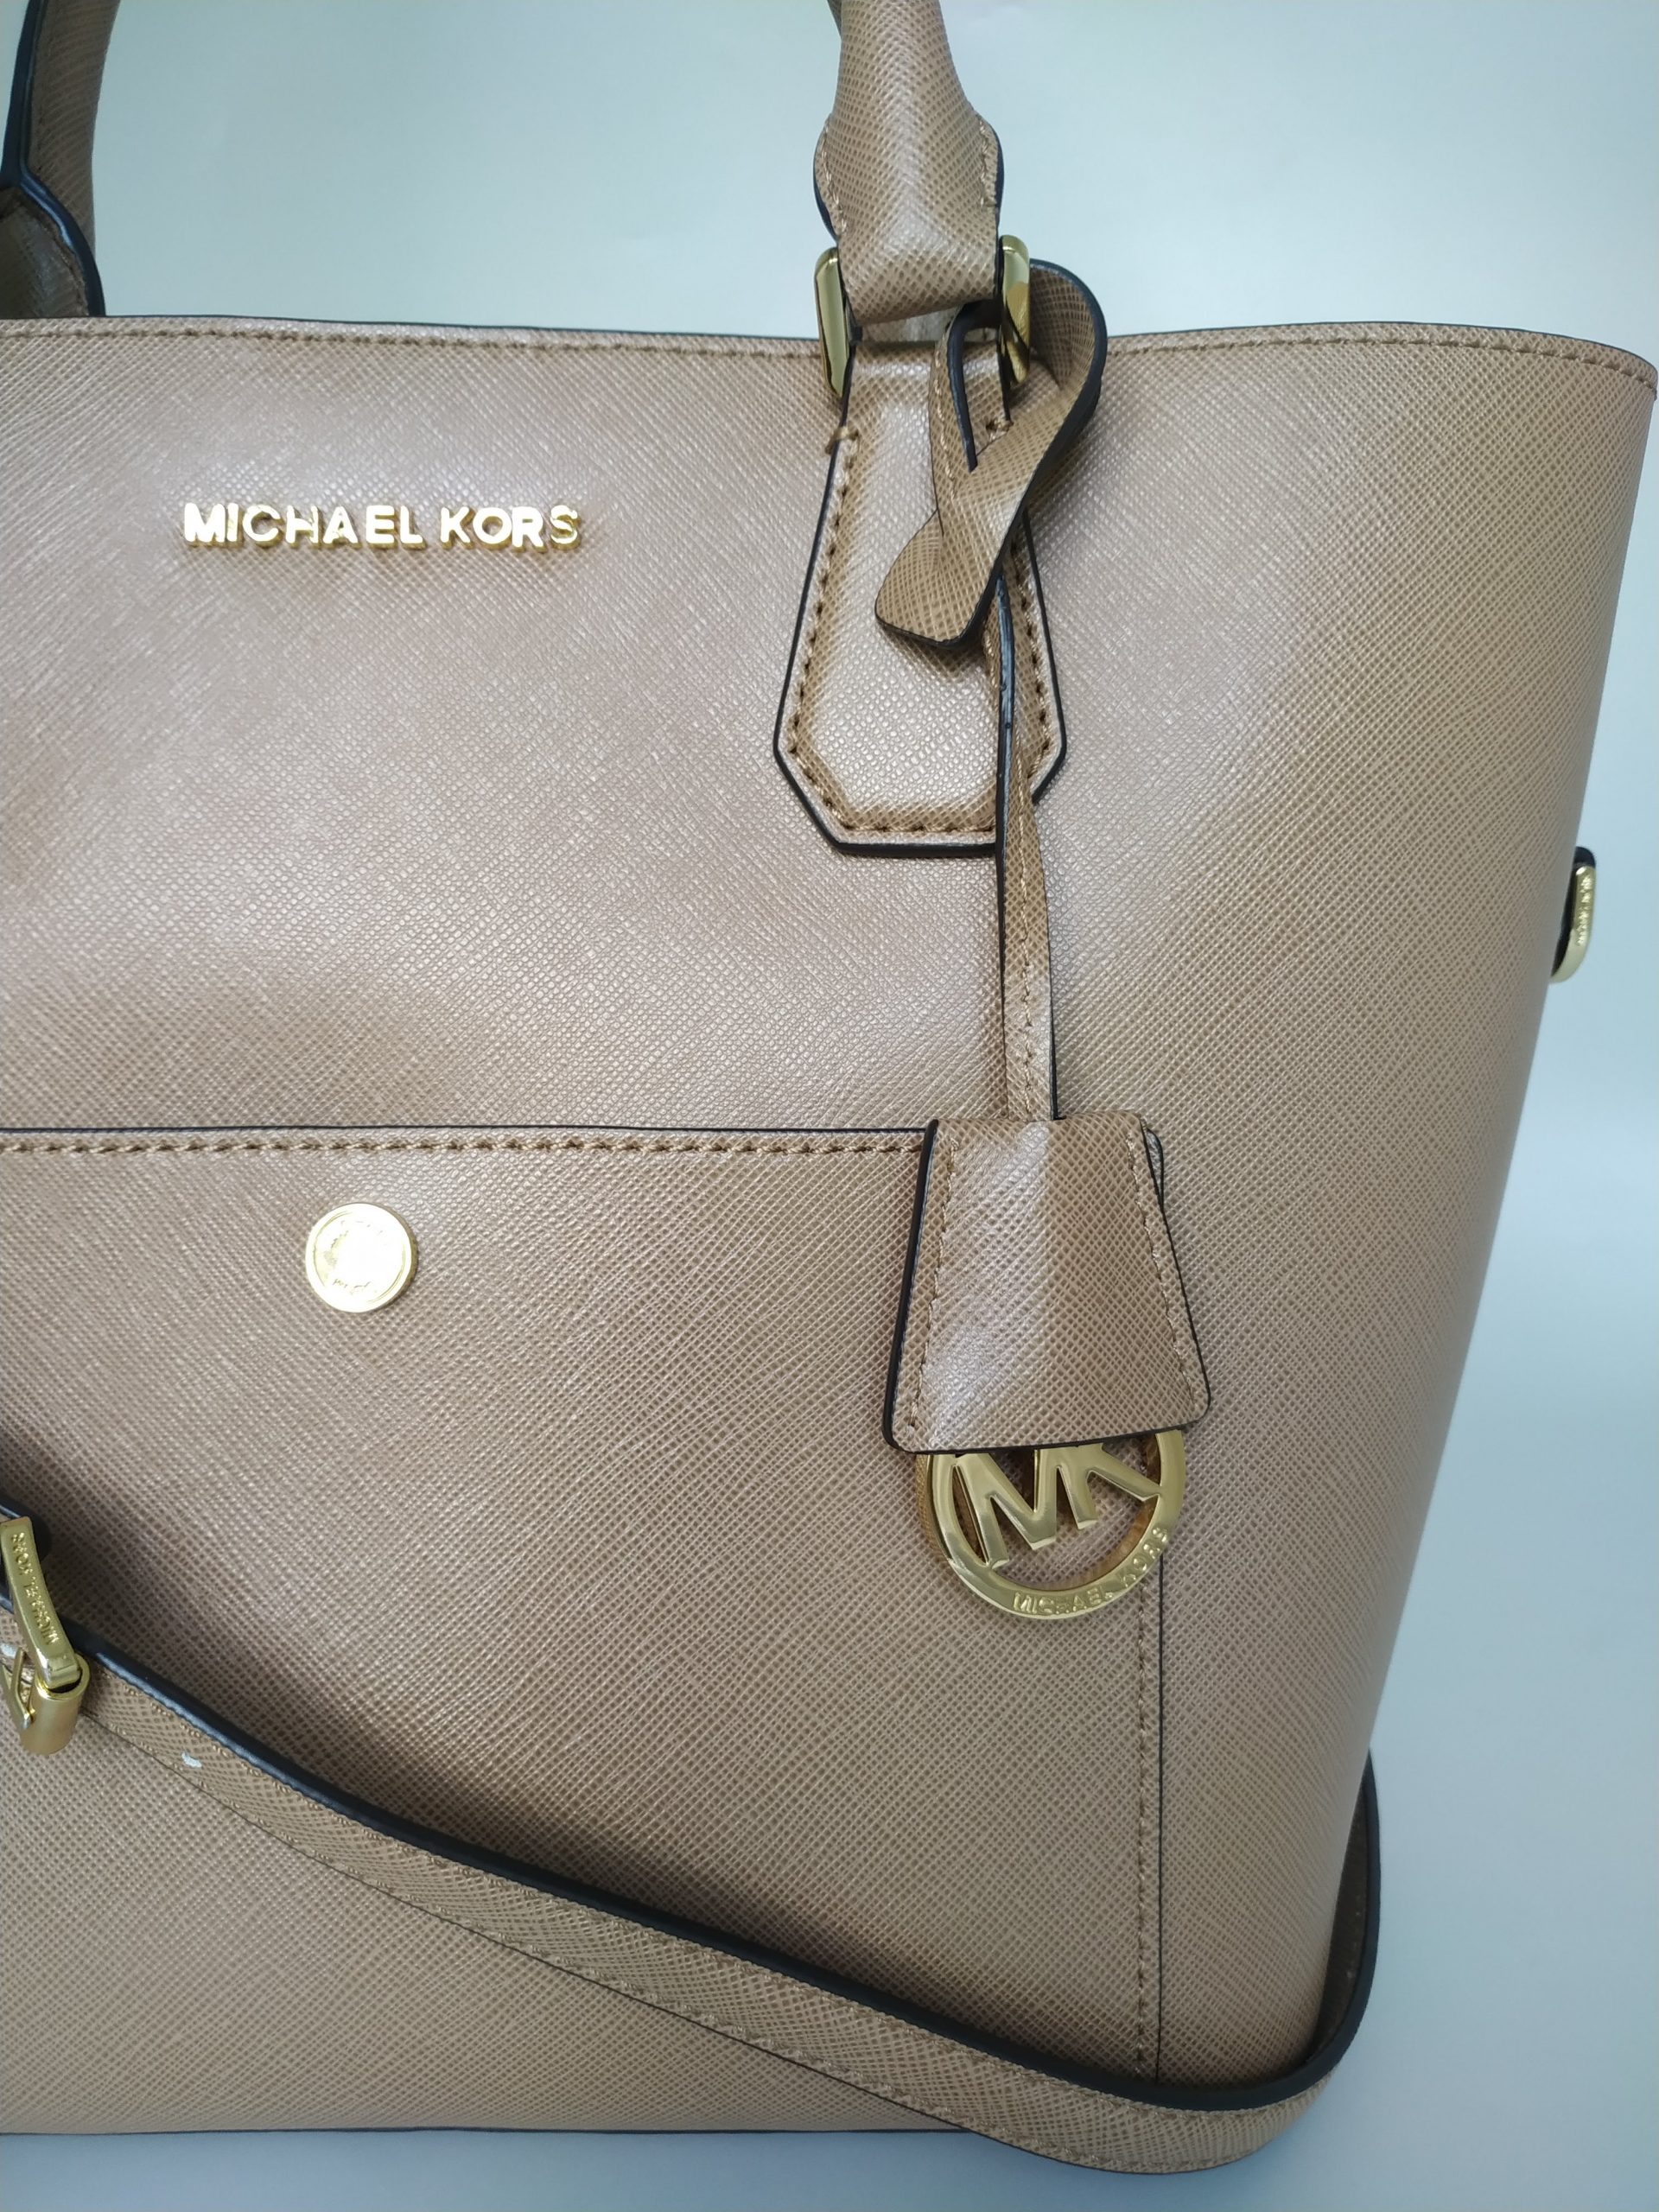 MK Michael Kors Large Sand Greenwich Tote Handbag Saffiano Leather ...